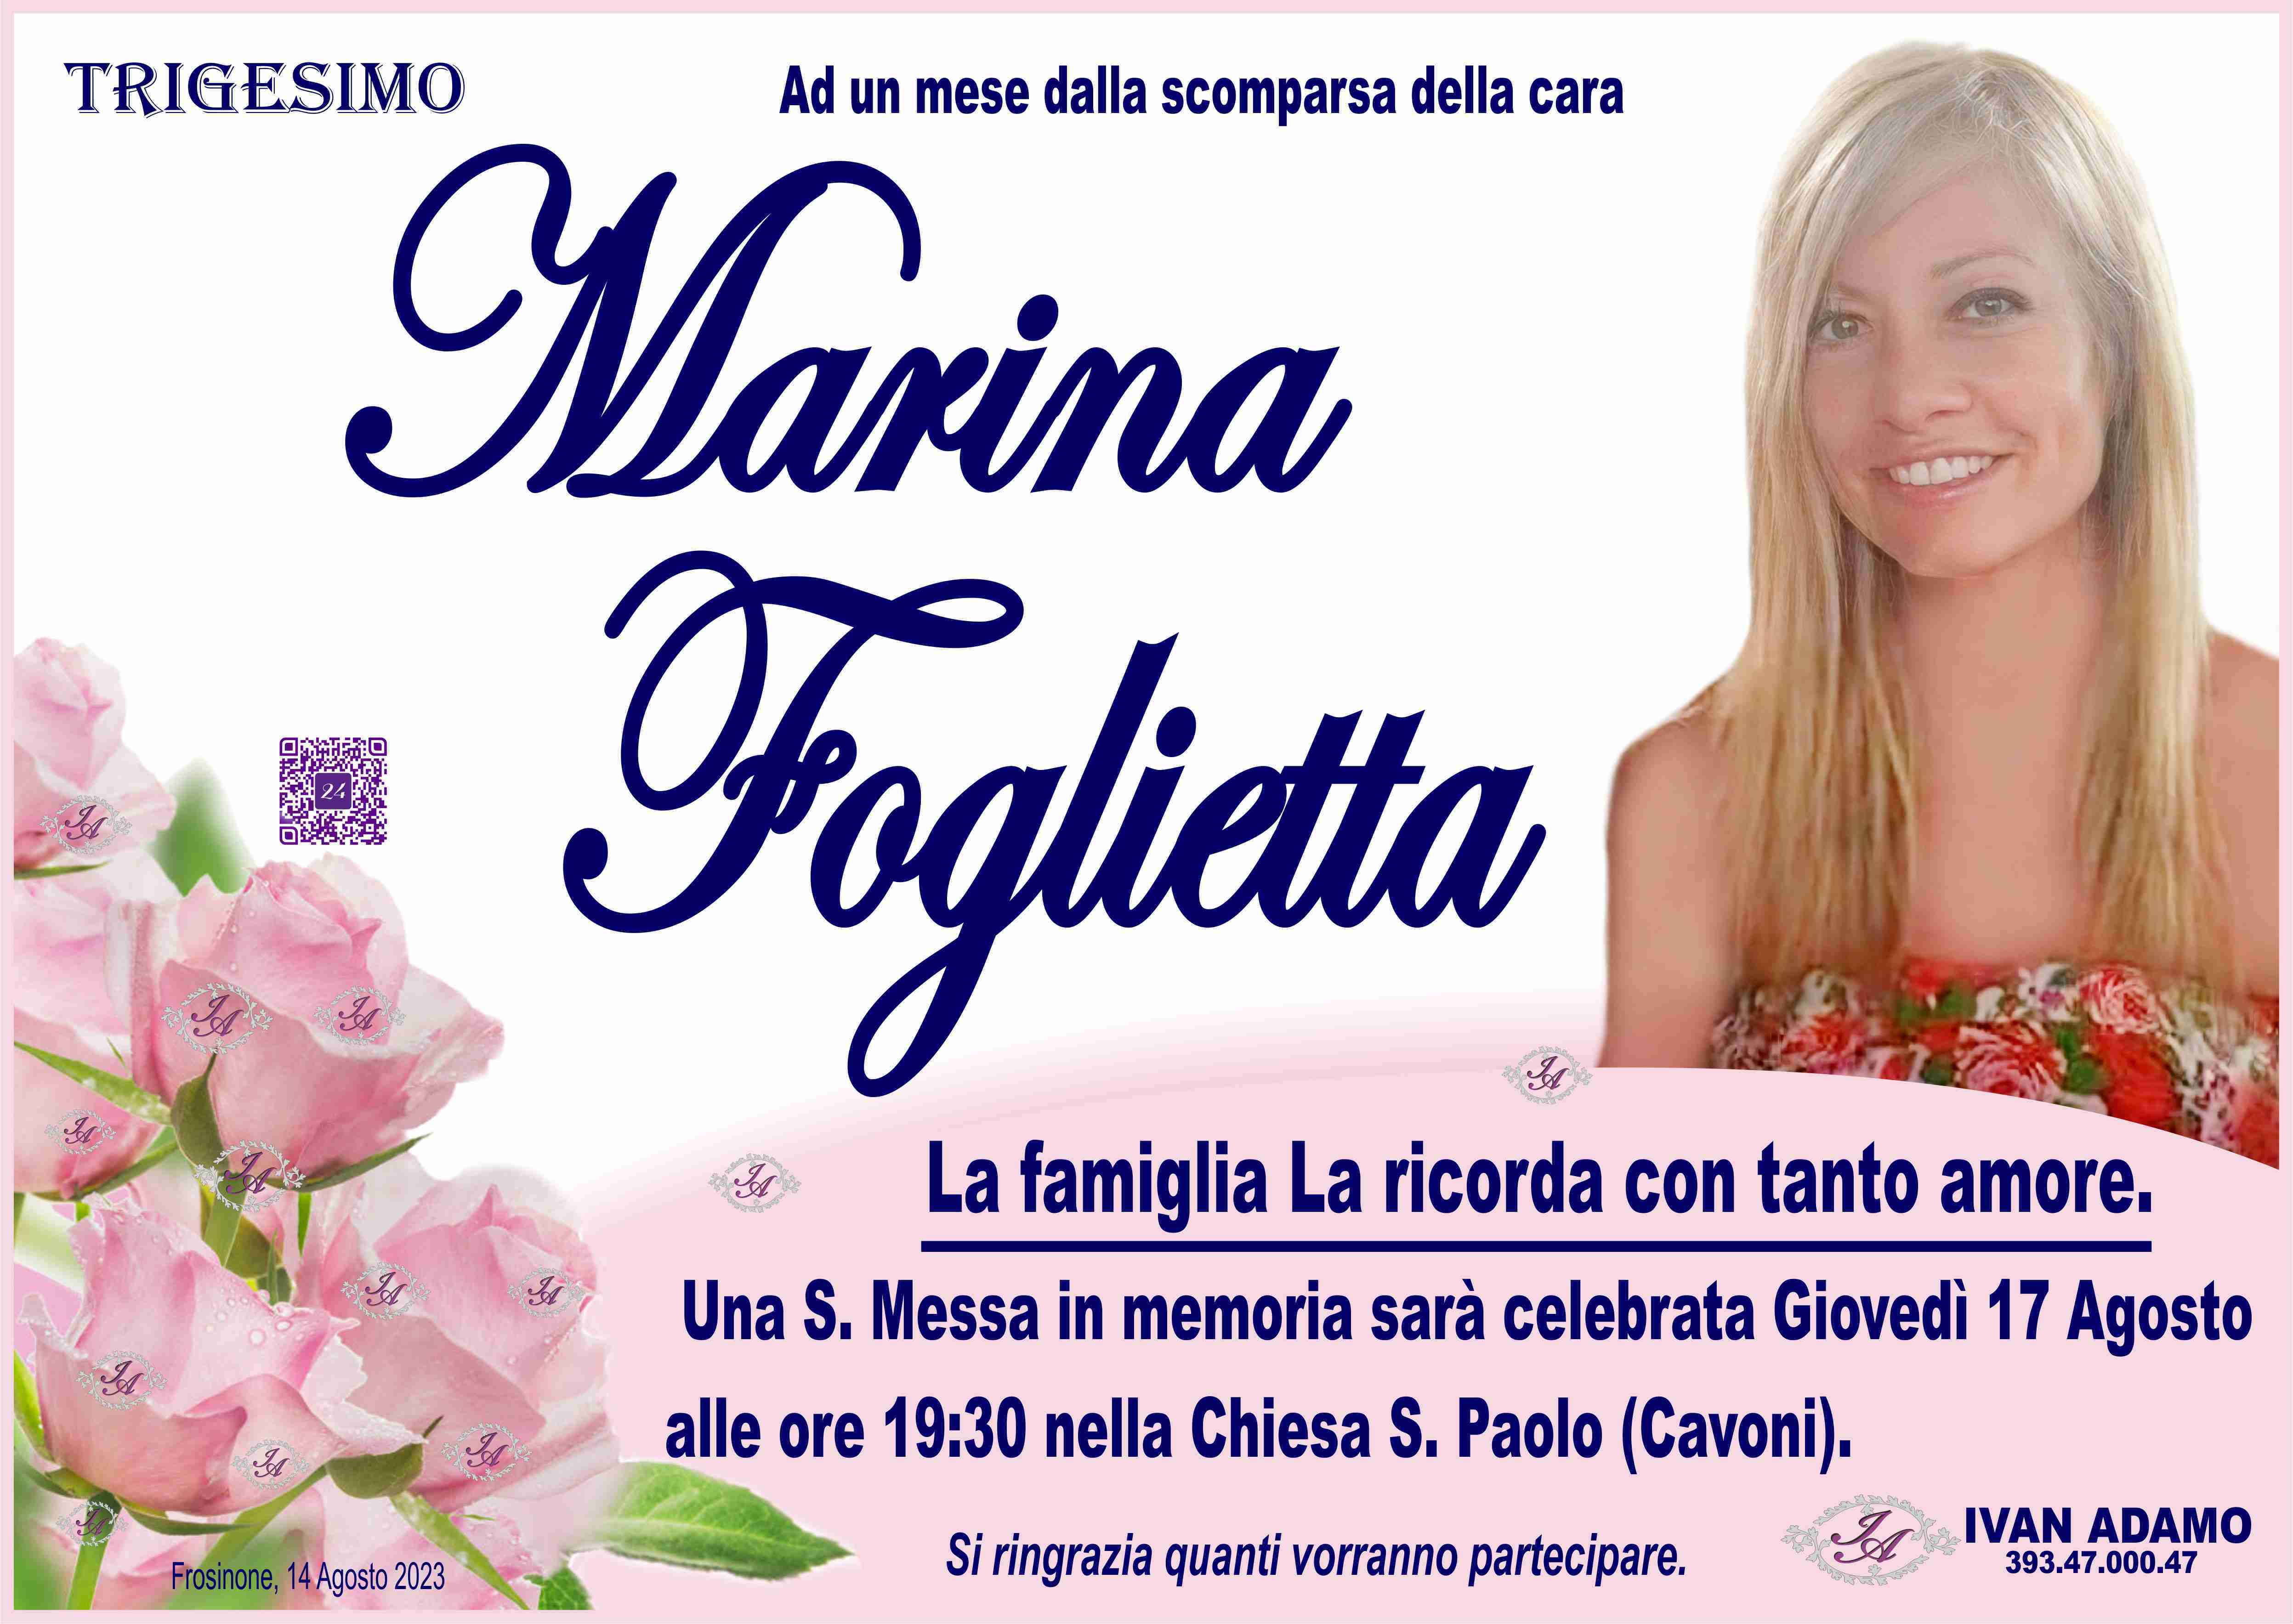 Marina Foglietta